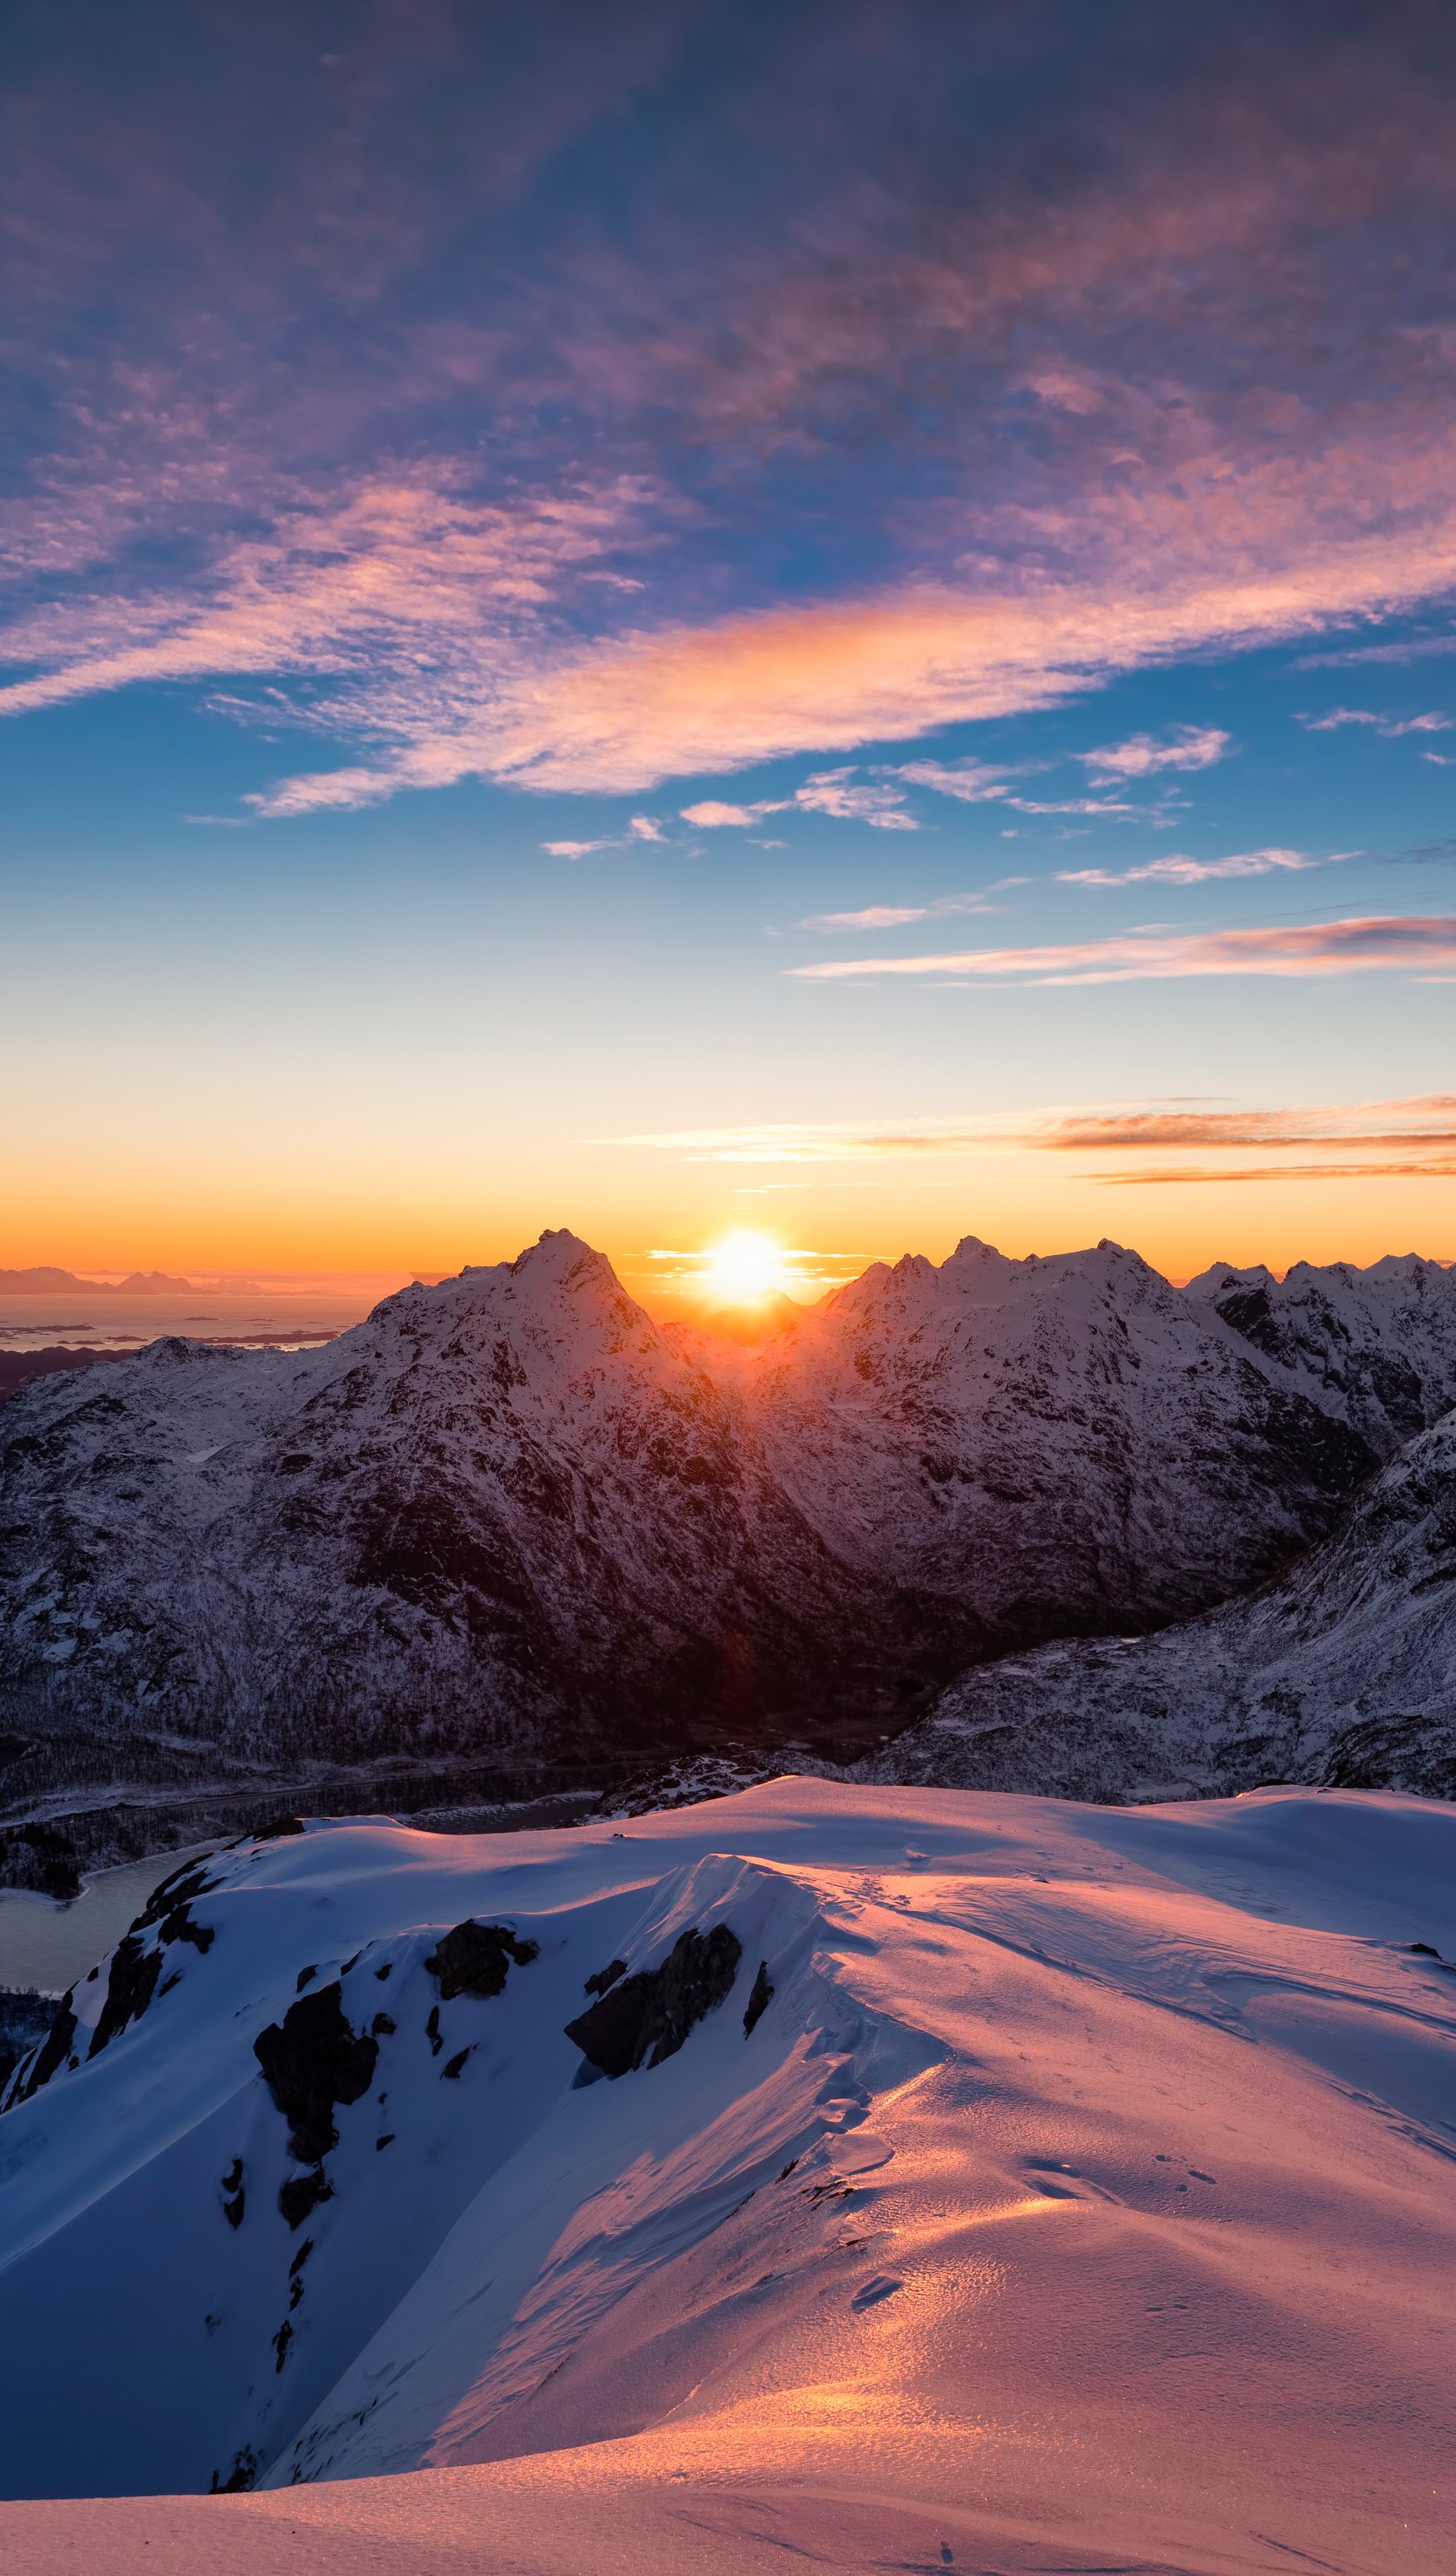 Sunset in snowy mountains Wallpaper 5k Ultra HD